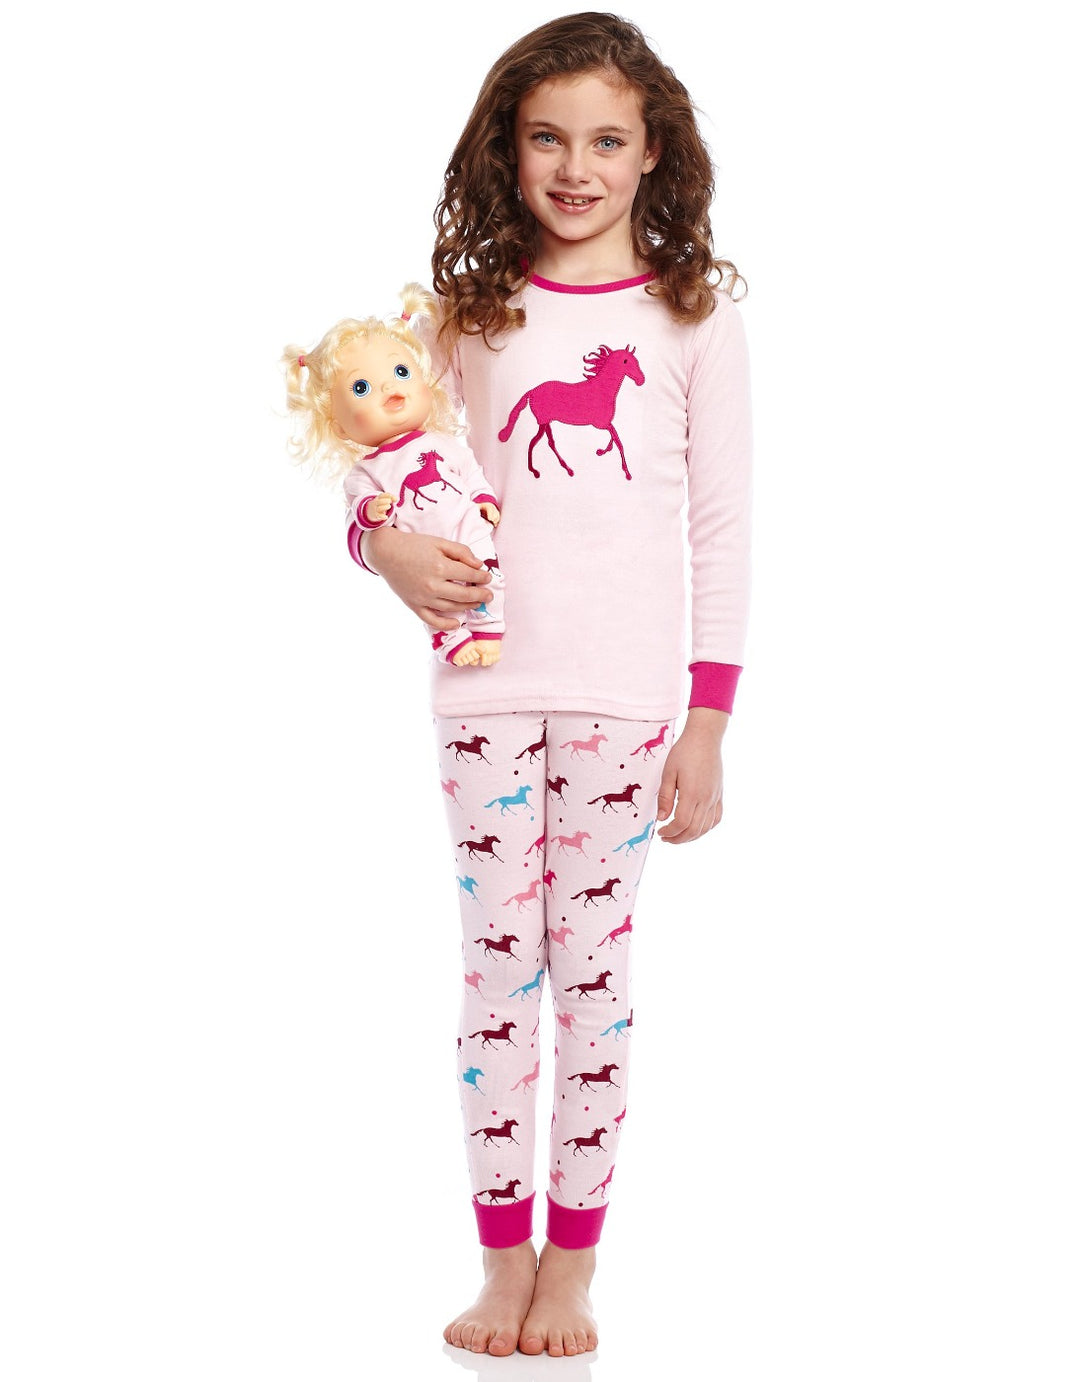 HDE Girls Unicorn Pajamas with Matching Doll Outfit Cotton Pajama